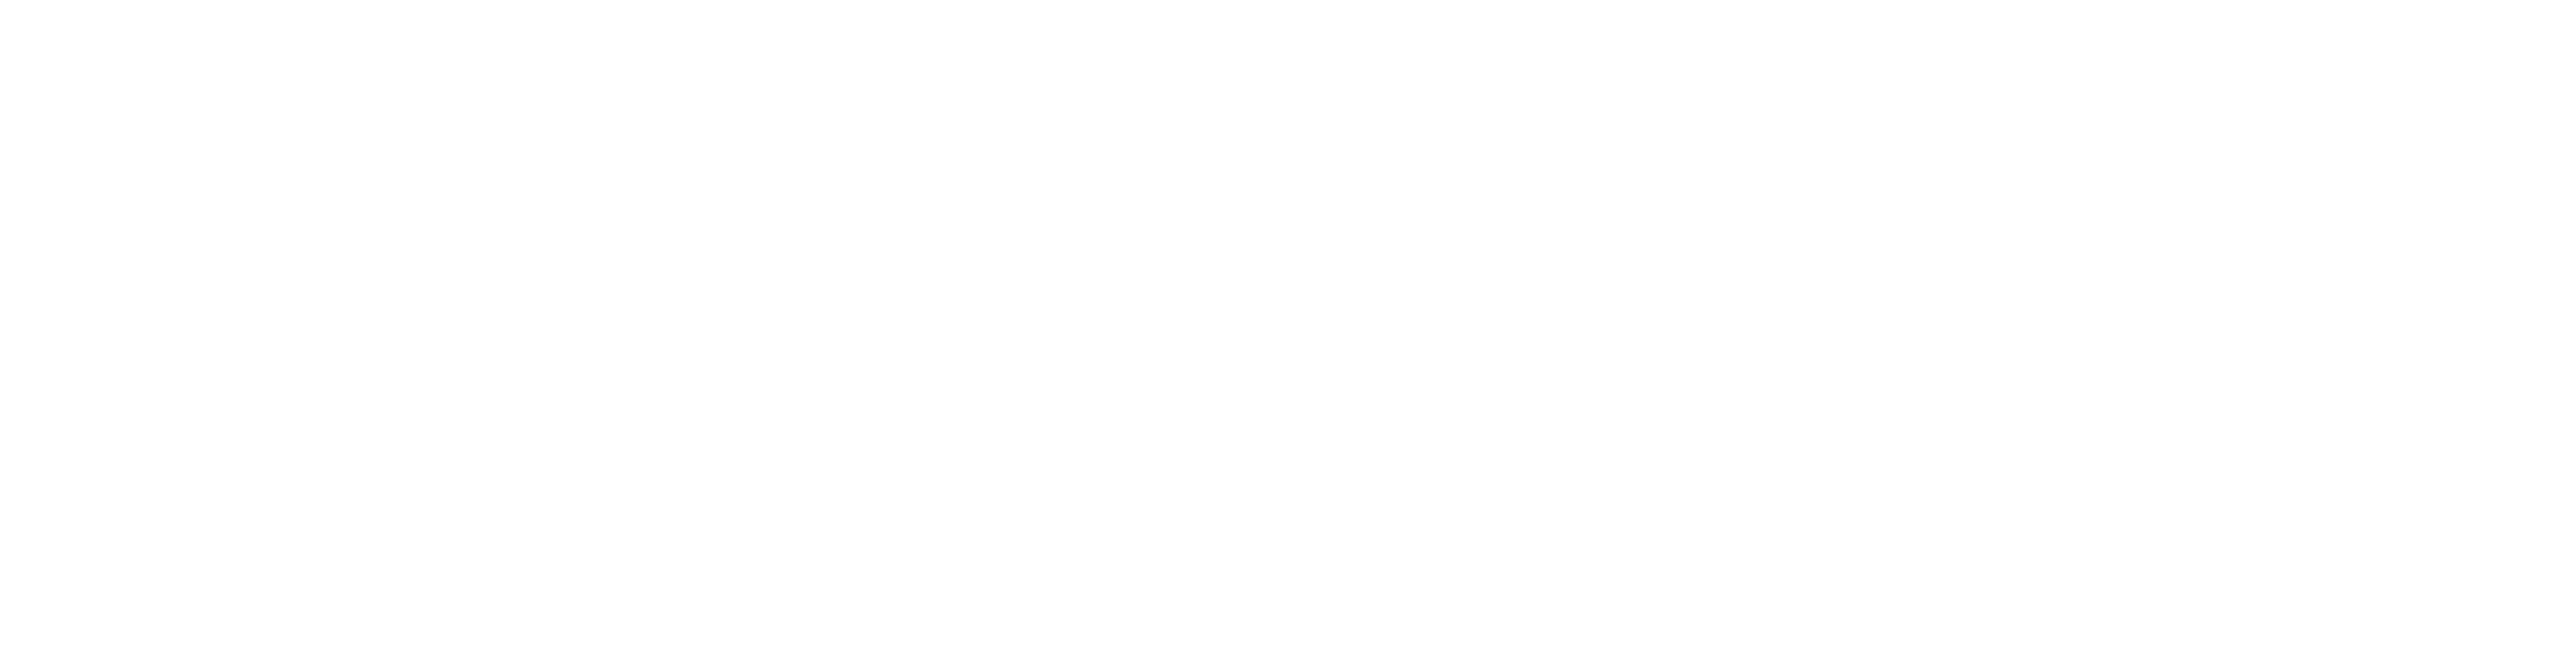 Carrefour Seguros